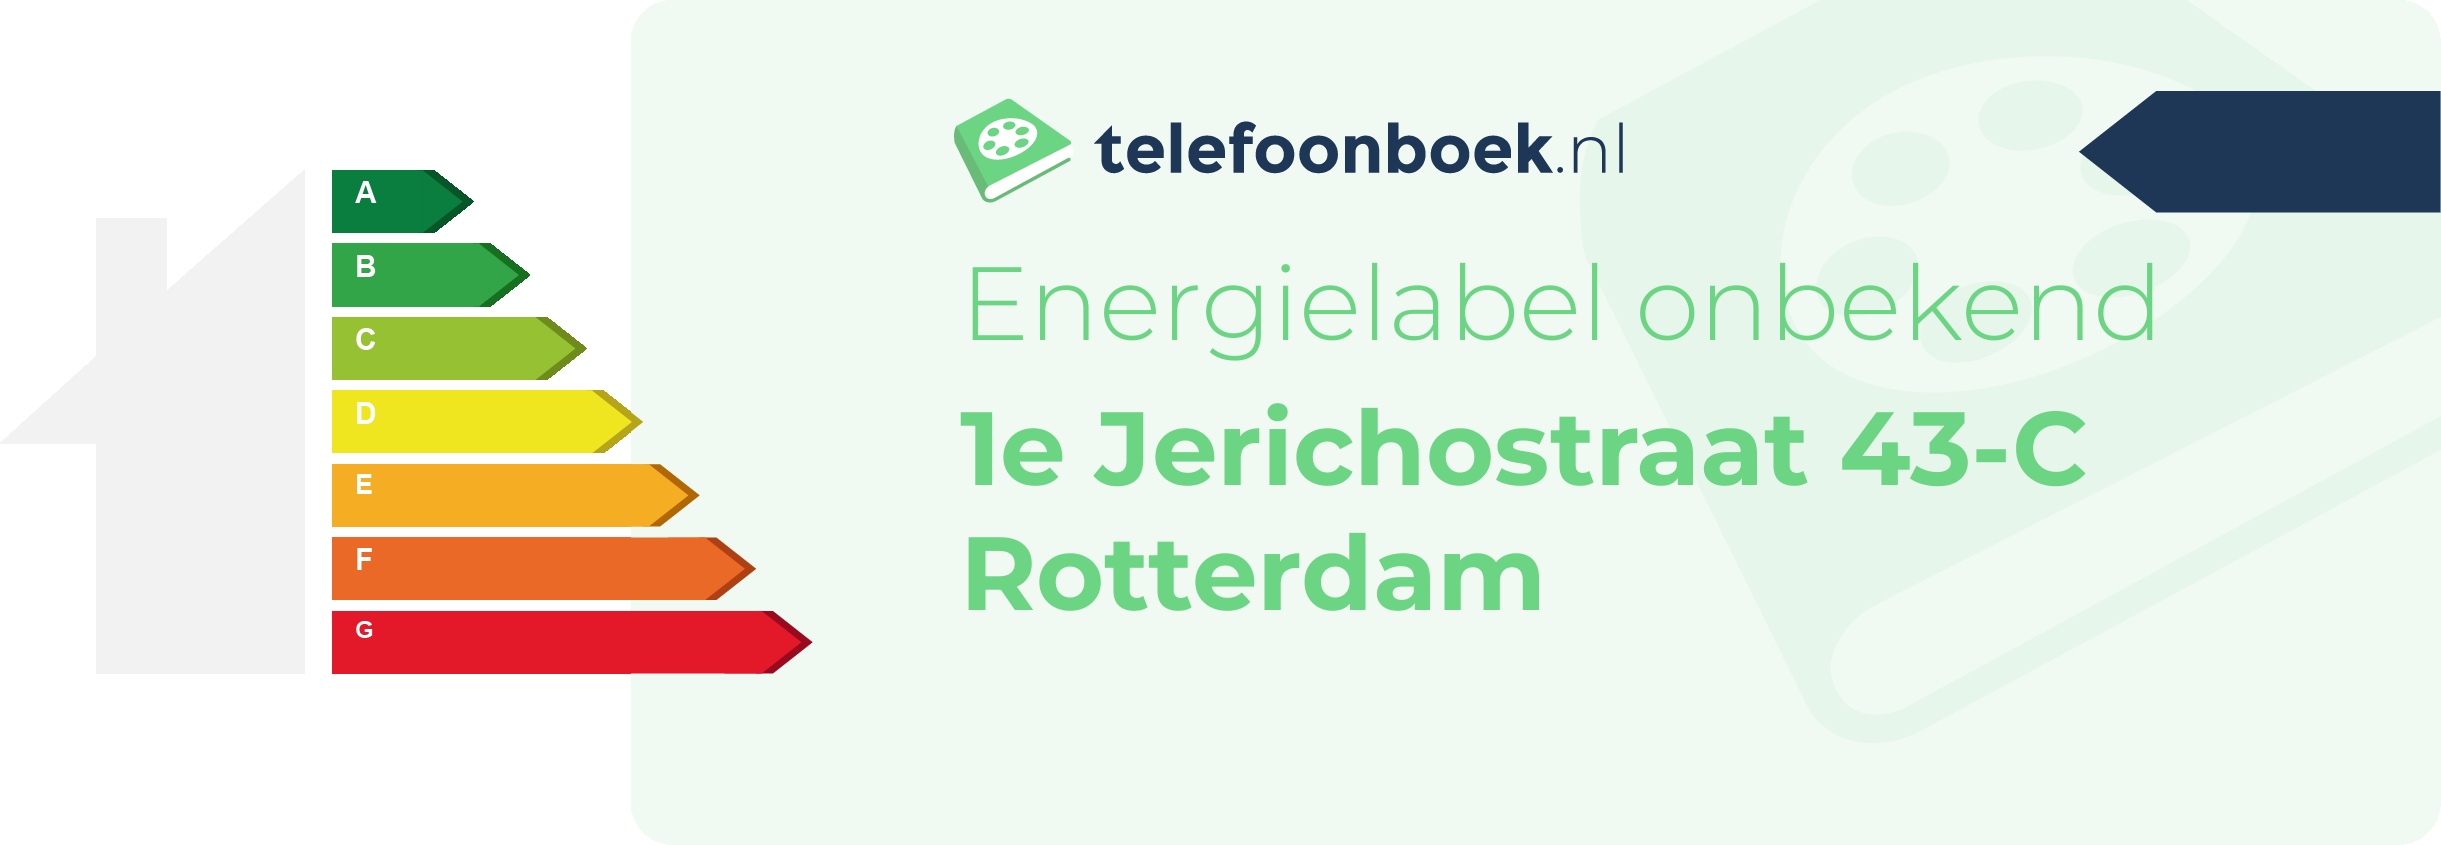 Energielabel 1e Jerichostraat 43-C Rotterdam